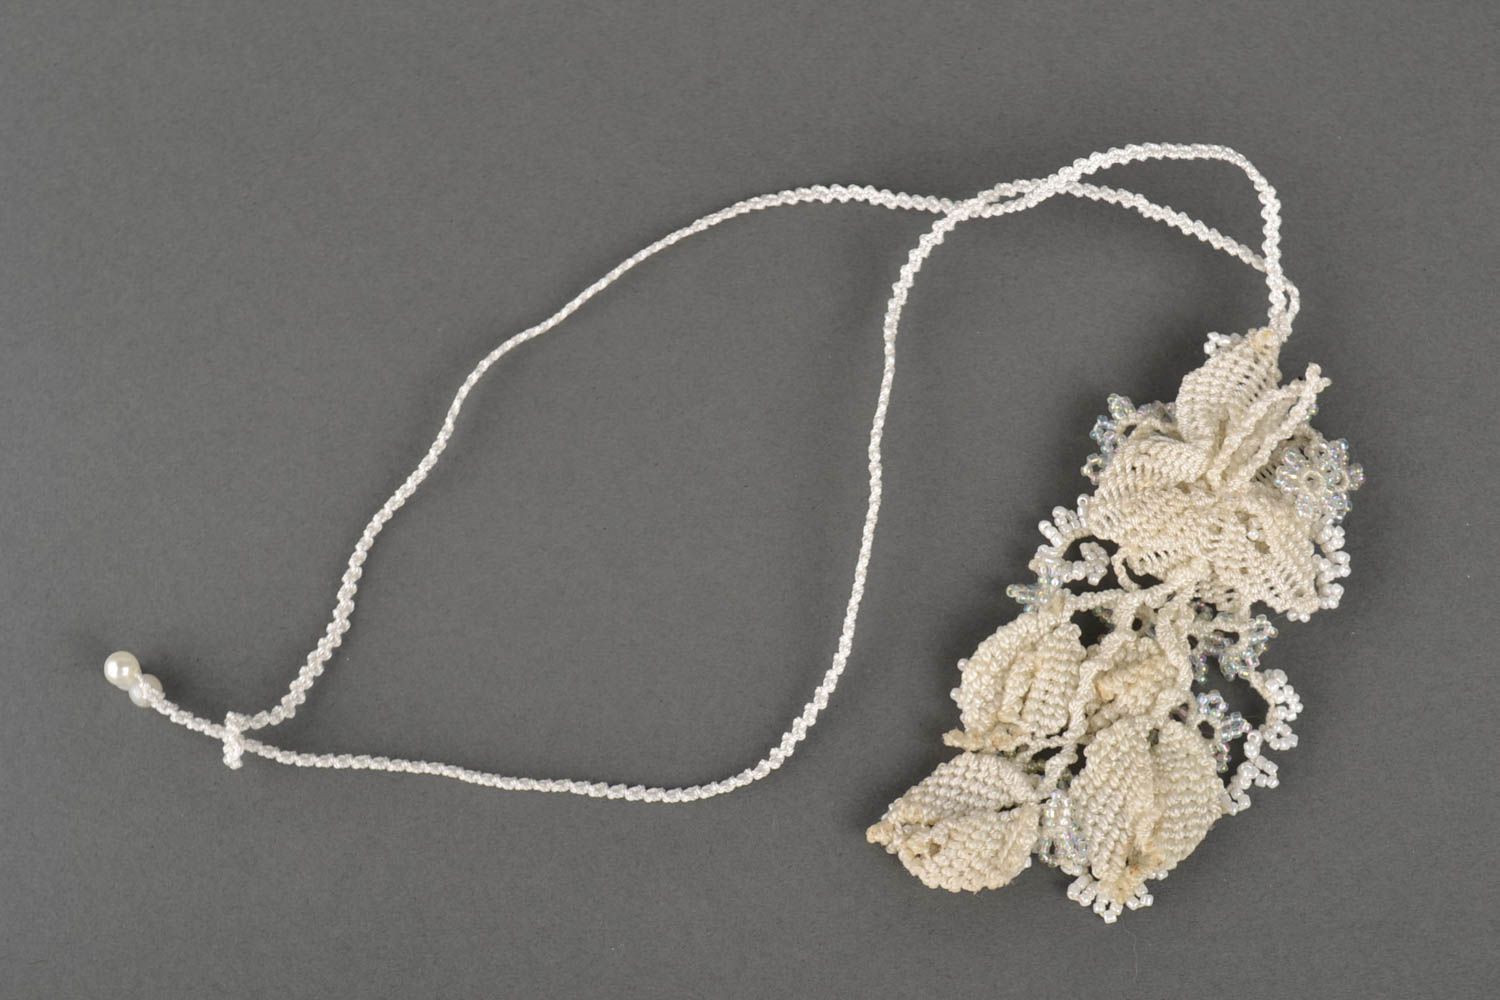 Handmade pendant beads pendant designer pendant gift ideas unusual jewelry photo 3